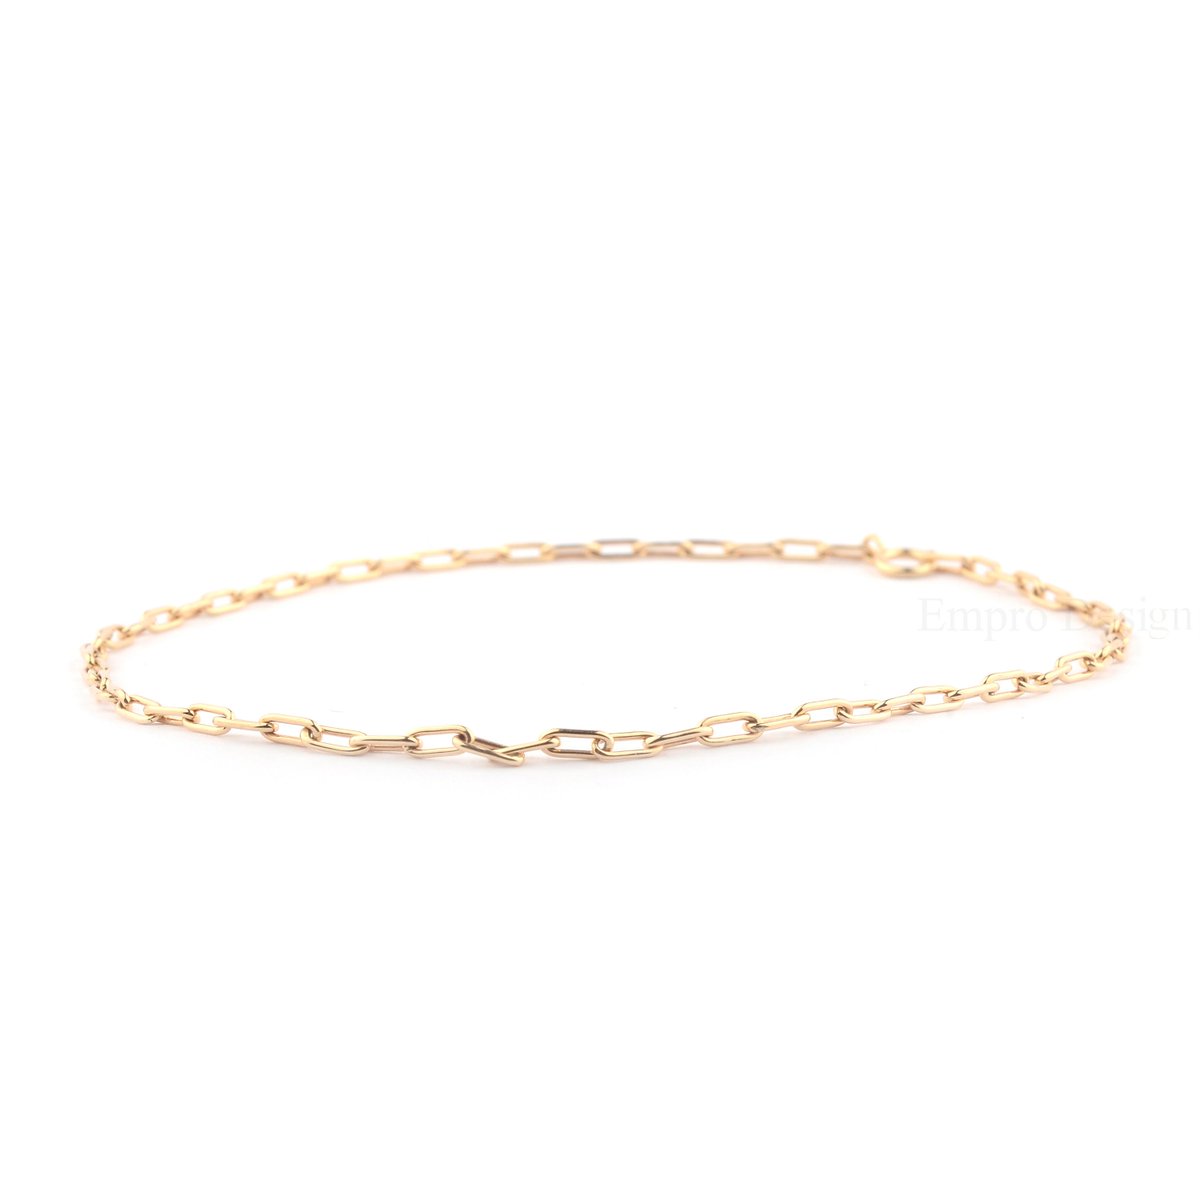 14K Gold Paperclip Bracelet/ Rectangle Link Chain Bracelet/ Solid Gold Bracelet/ Minimalist Bracelet/ Stackable Bracelet/ Modern Bracelet
#dainty #minimalist #bracelets #gold #paperclipchain #stackable #etsyshop #giftforher #modenbracelet #recycledmetal